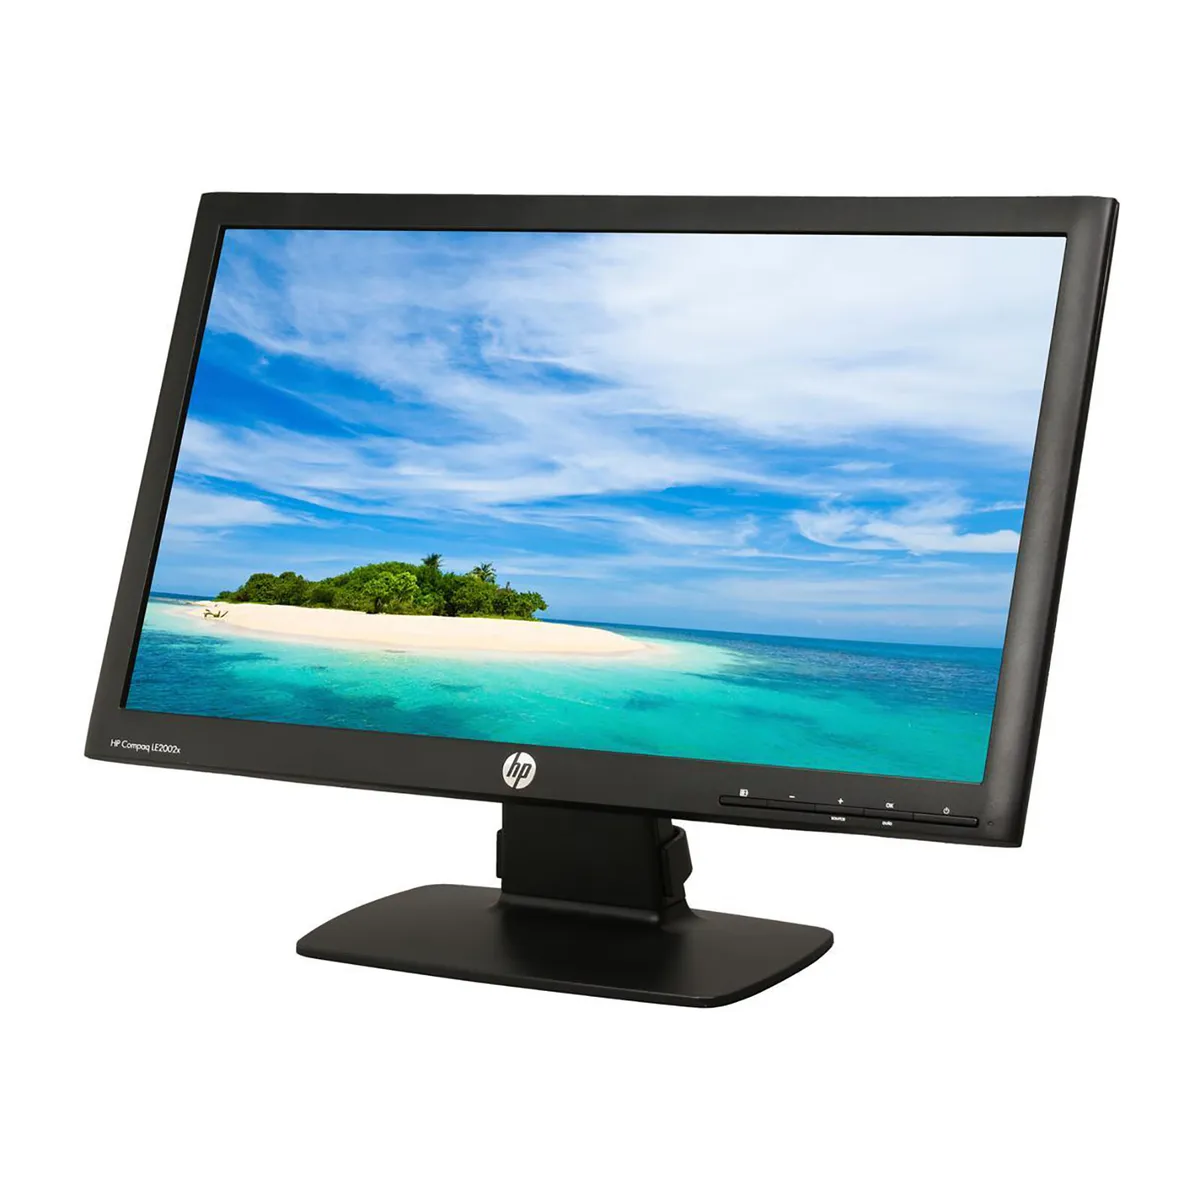 Compaq S1921 18.5-inch Widescreen LCD Monitor